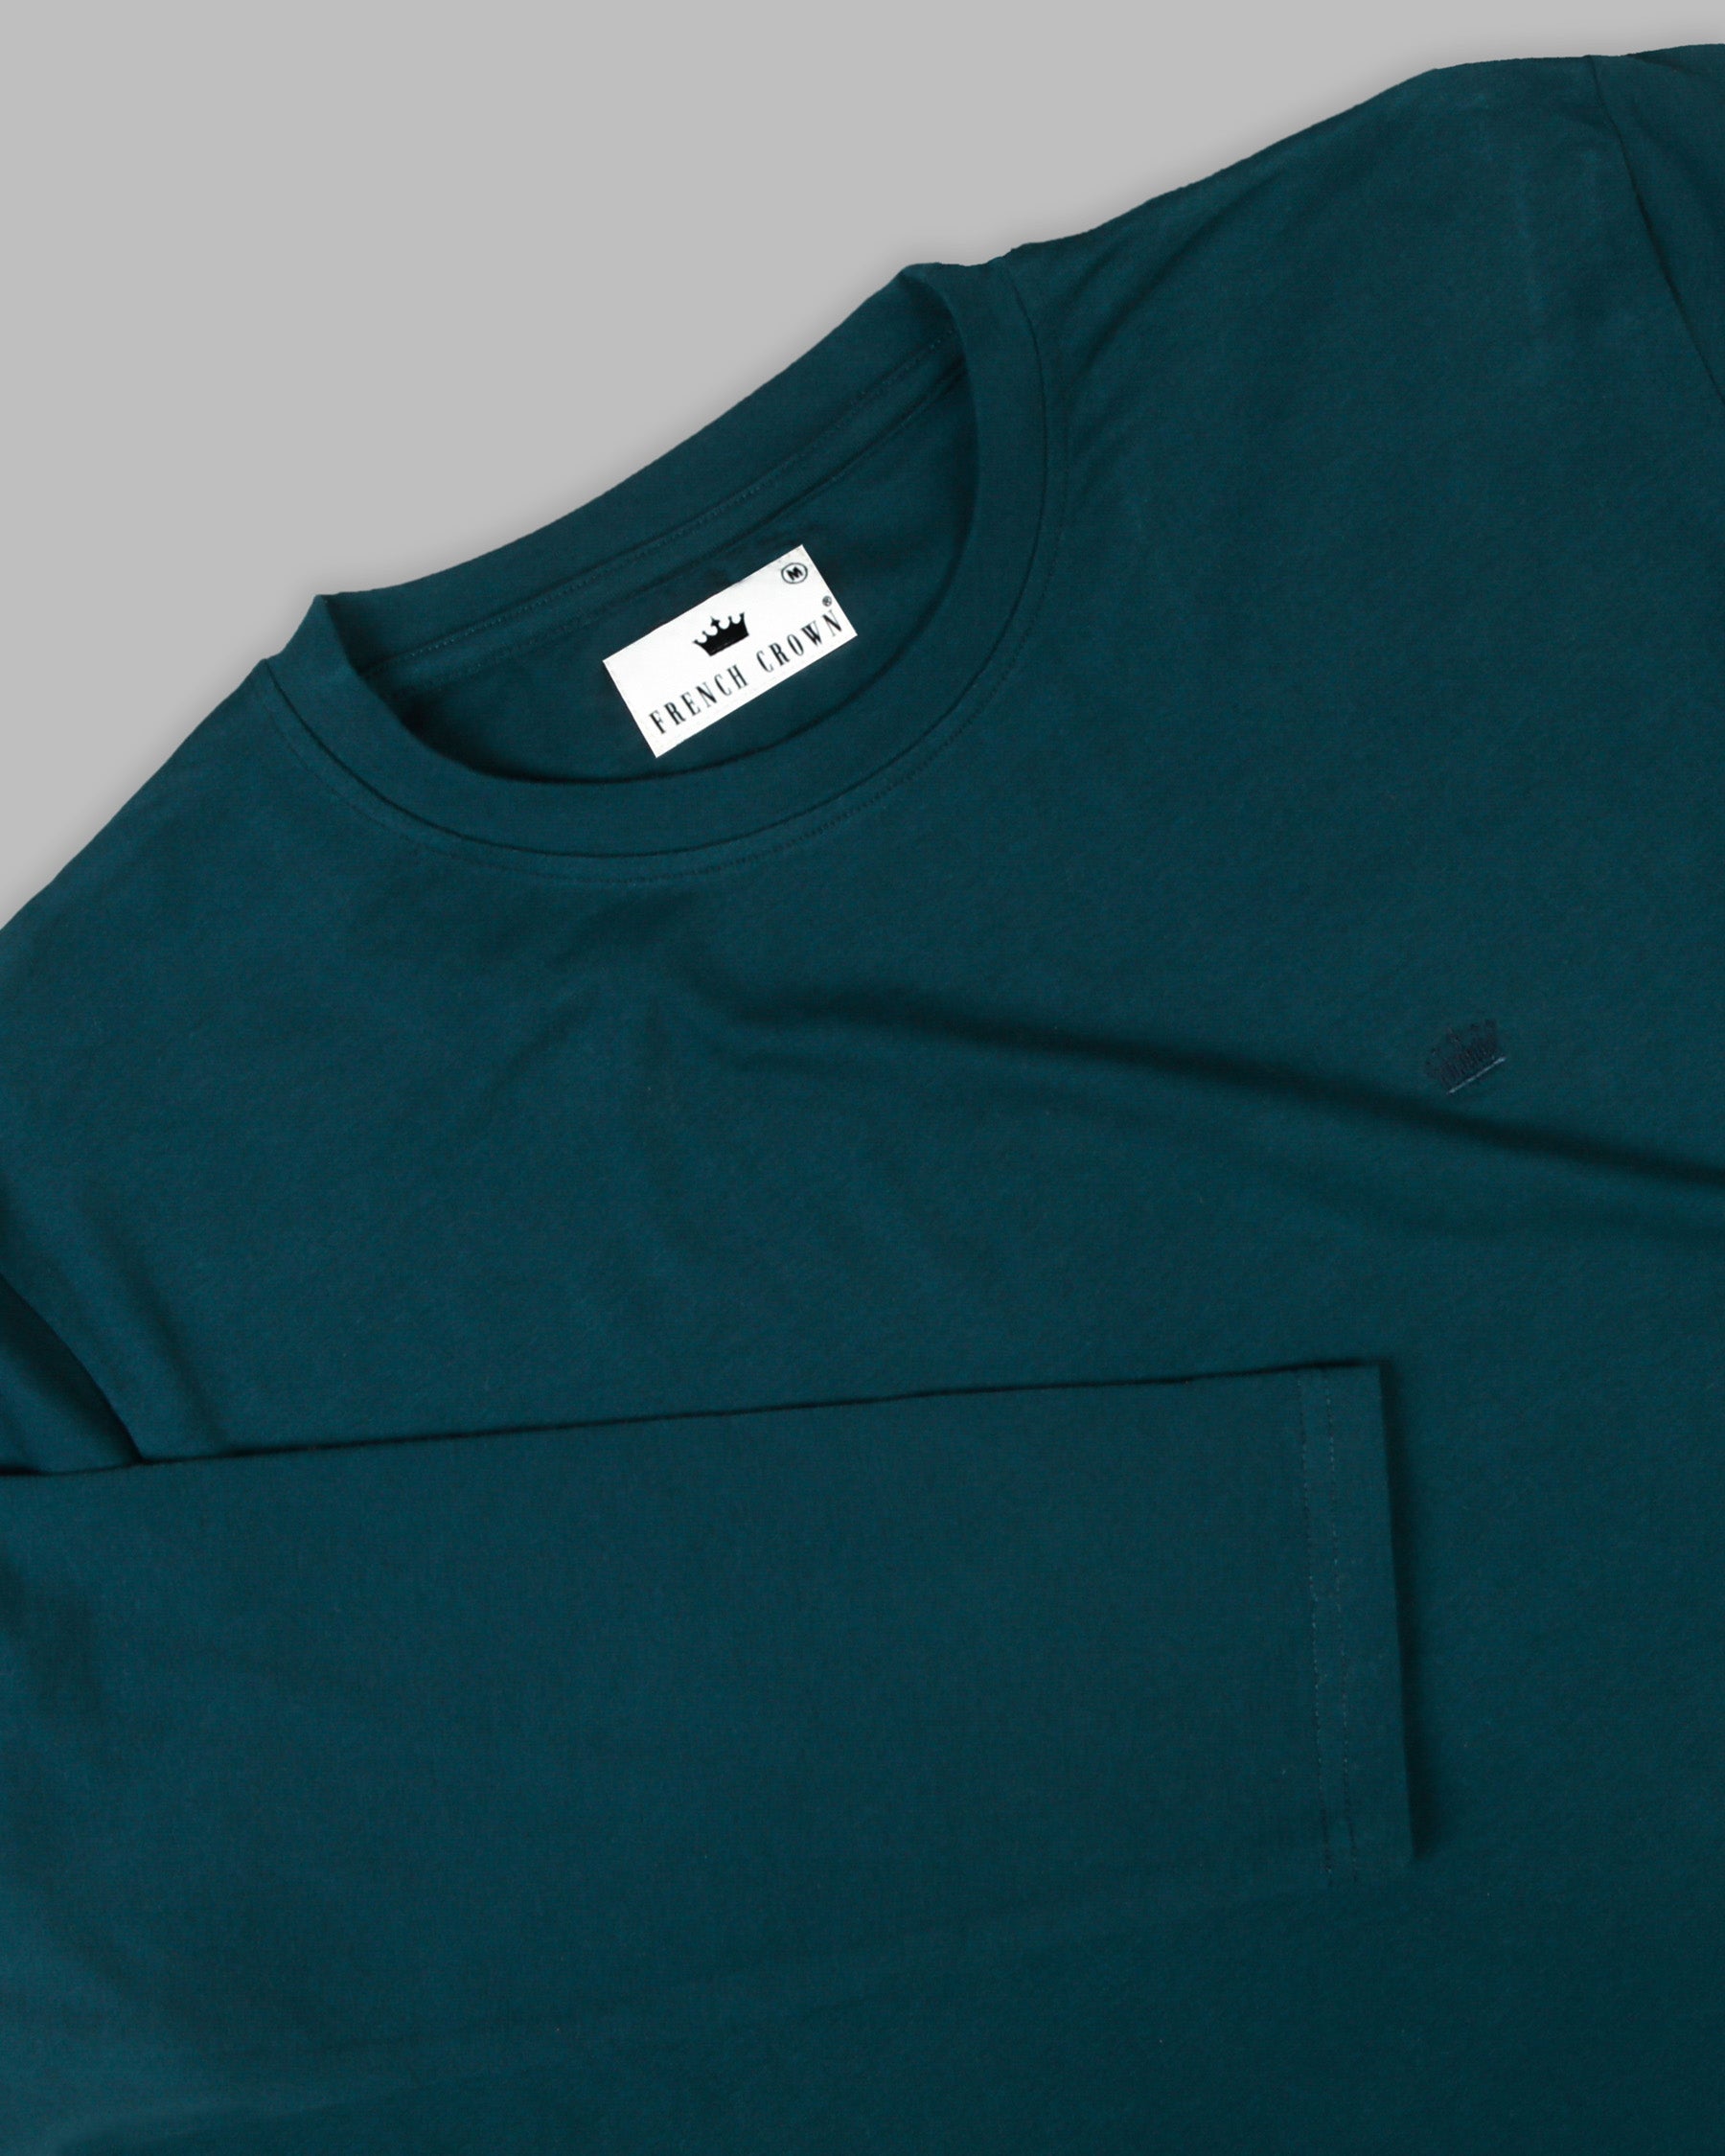 Peacock Blue Full-Sleeve Super soft Organic Cotton Jersey T-shirt TS123-S, TS123-M, TS123-L, TS123-XL, TS123-XXL